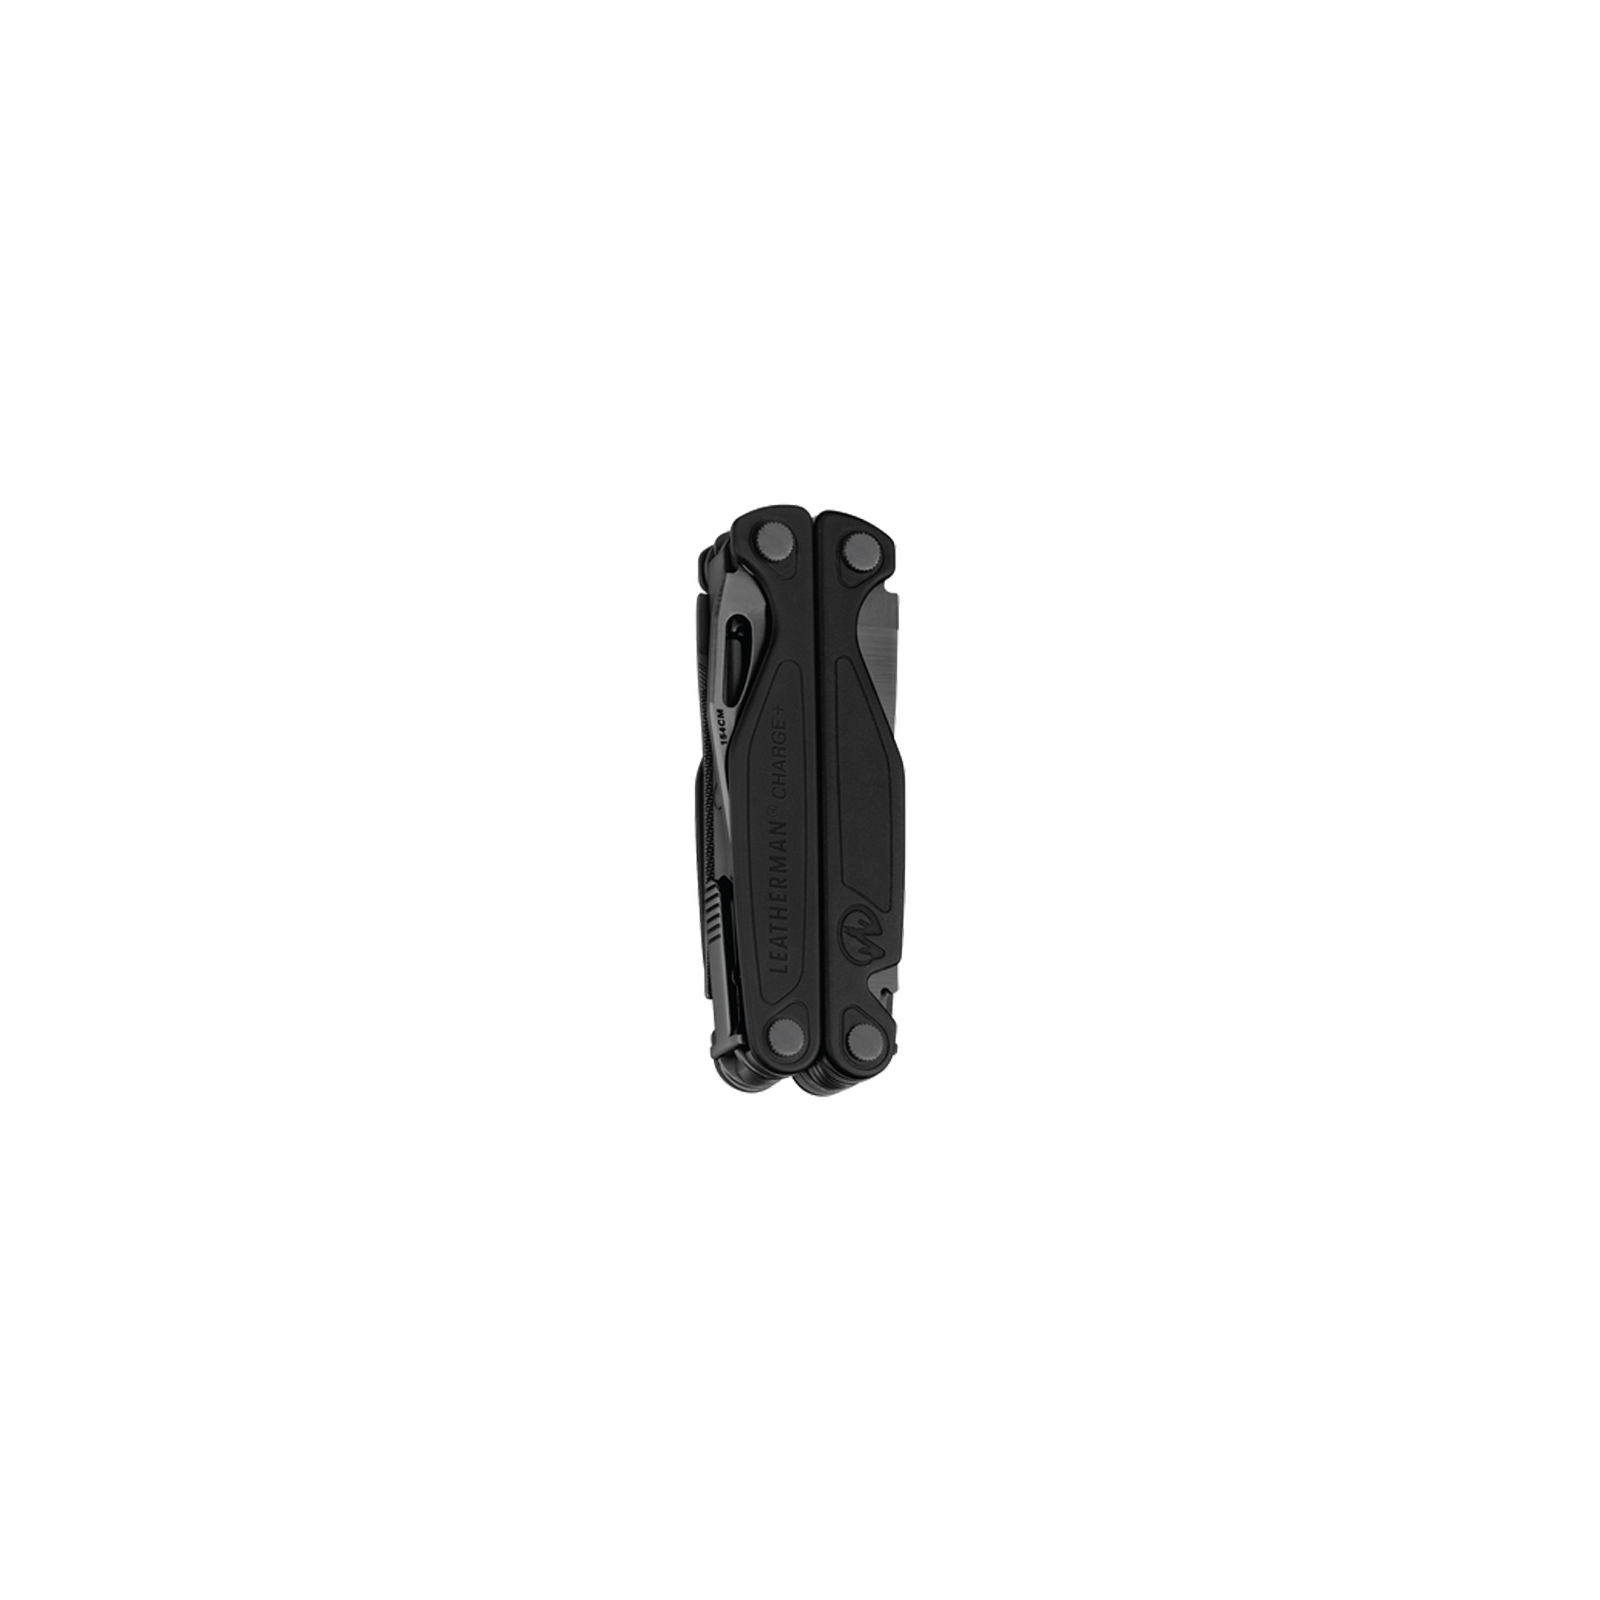 Мультитул Leatherman Charge Plus Black, синтетич. чехол, карт. кор., метрич. биты (832601) зображення 3